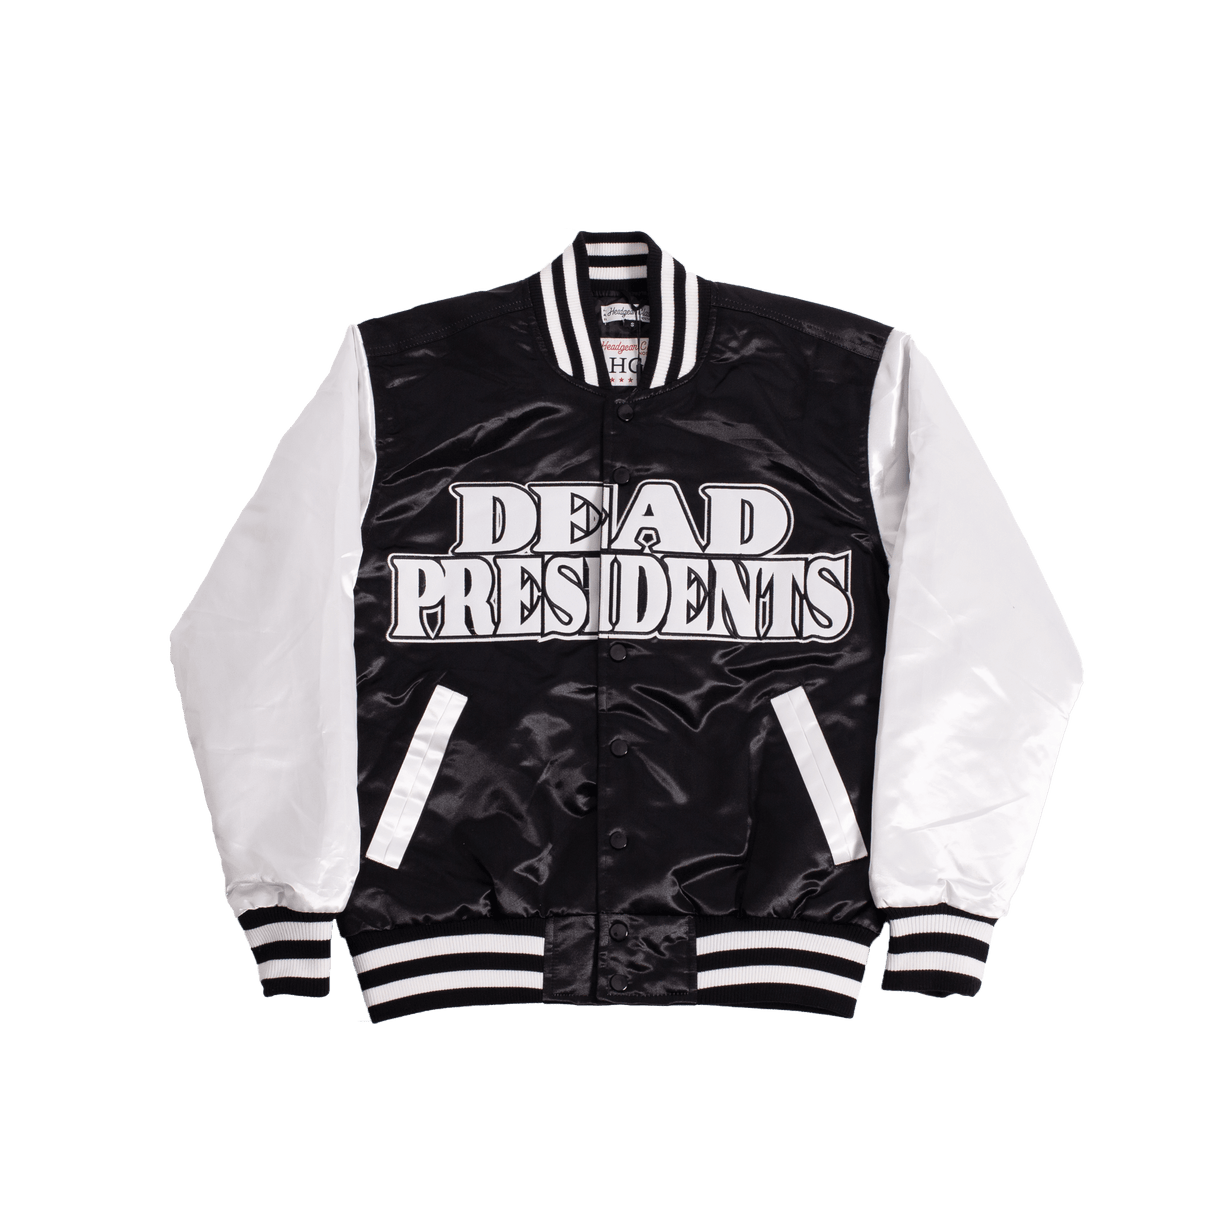 Dead Presidents Satin Jacket Black With White Sleeves - Allstarelite.com